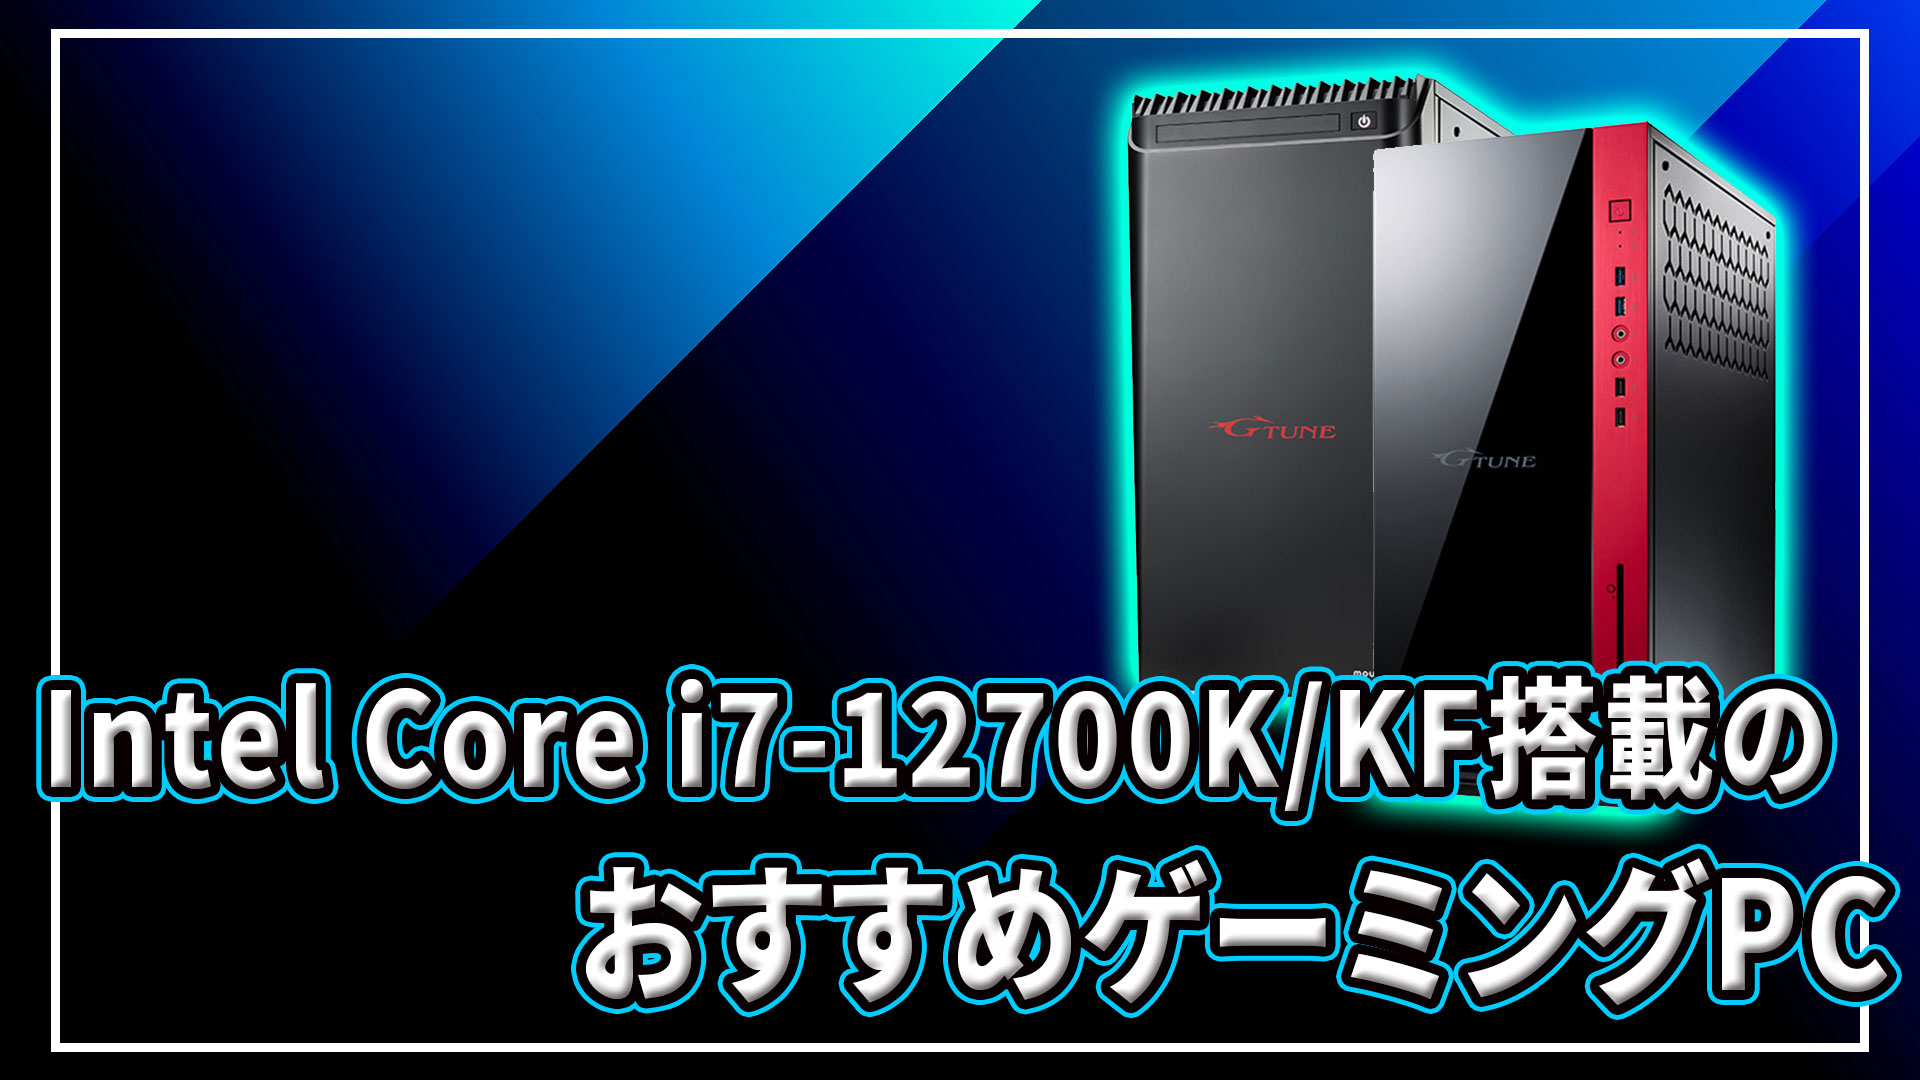 Intel Core i7-12700K/12700KF｣搭載のおすすめゲーミングPC4選 